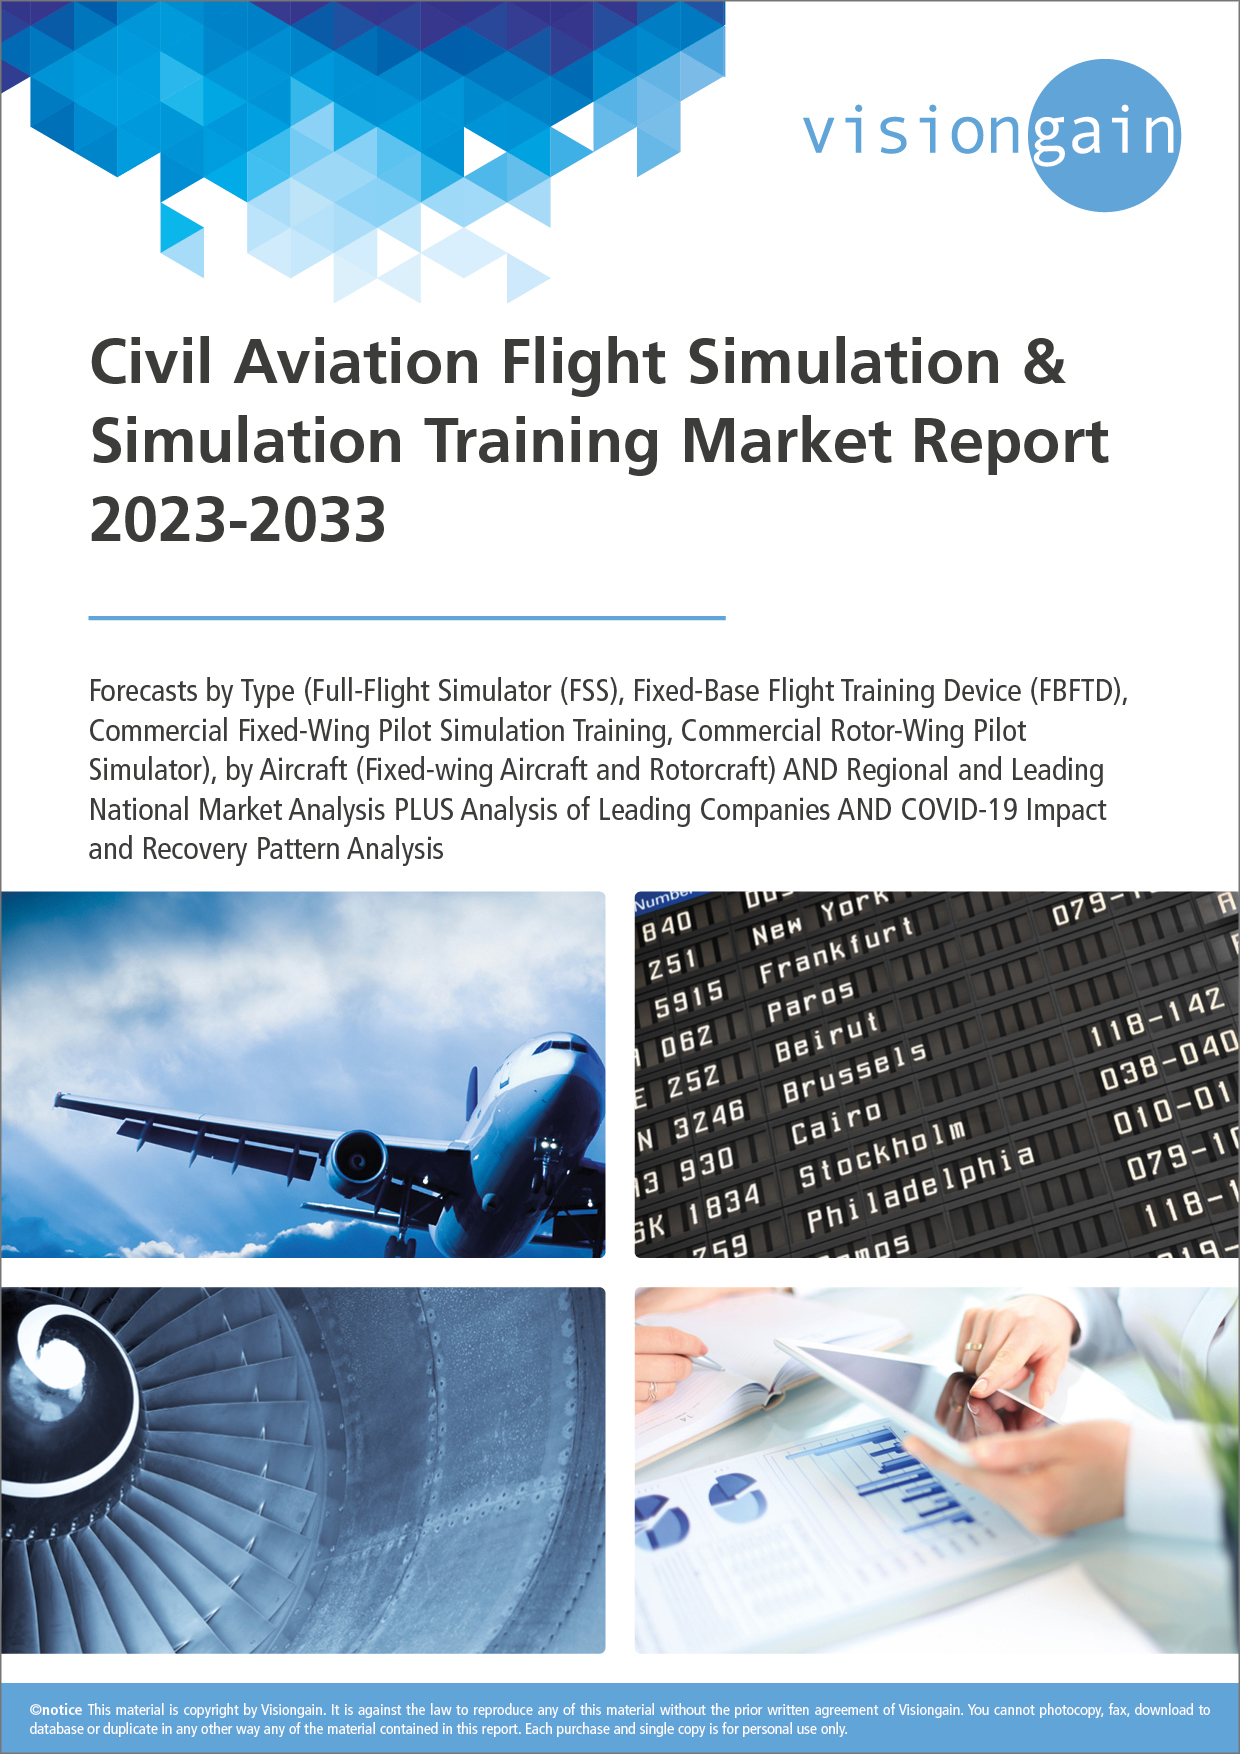 Civil Aviation Flight Simulation & Simulation Training Market Report 2023-2033